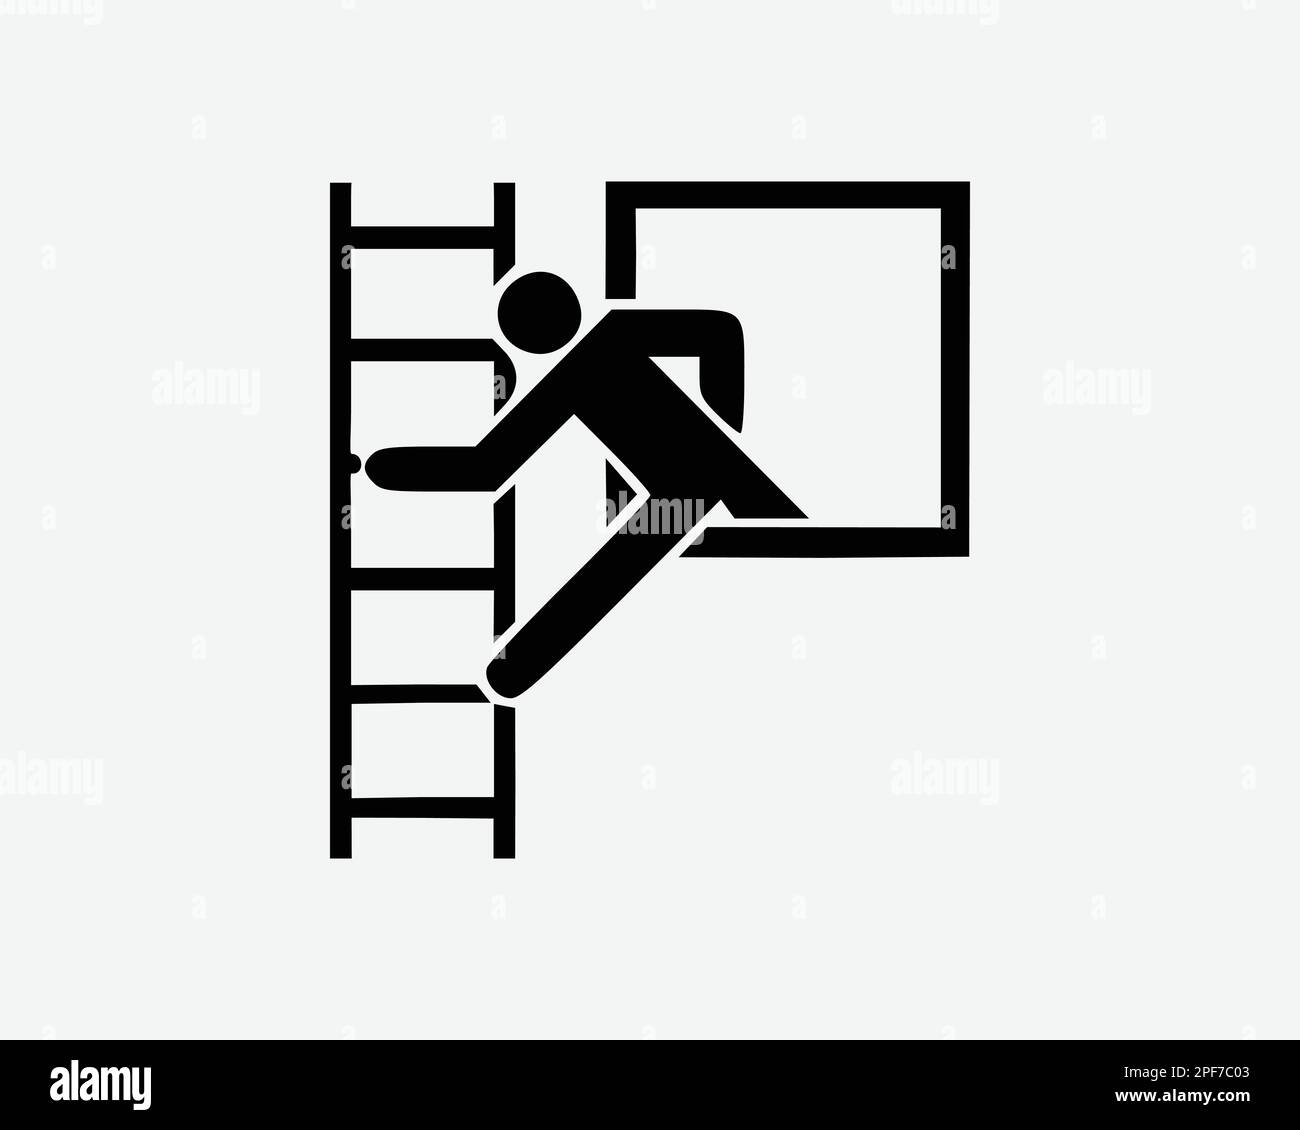 Emergency Window Escape Ladder Man Fire Evacuation Black White Silhouette Sign Symbol Icon Graphic Clipart Artwork Illustration Pictogram Vector Stock Vector